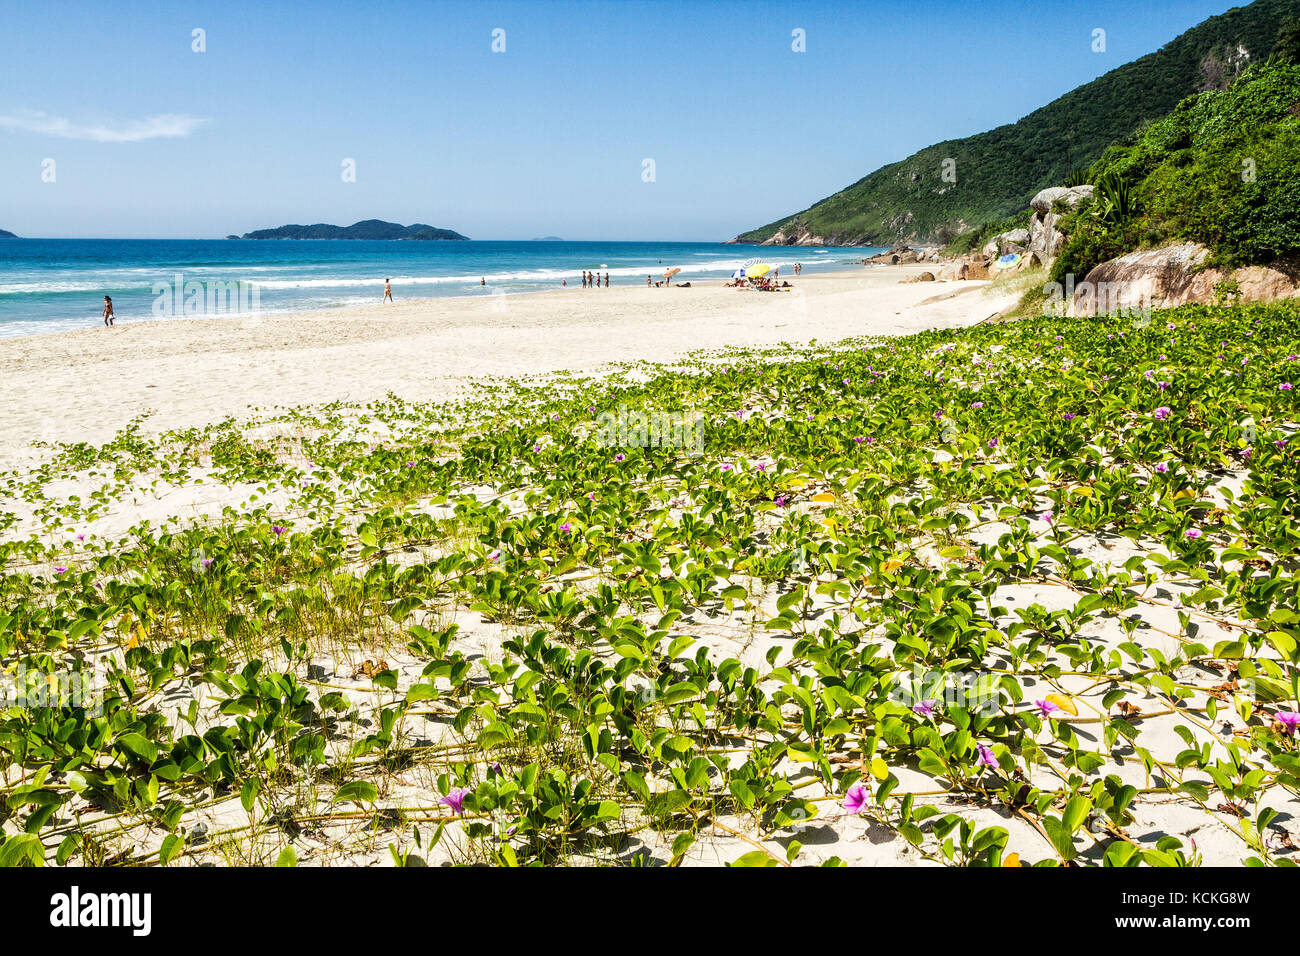 Sandbank Vegetation bekannt als Strand Morgen Ruhm oder Ziegenfuß (Ipomoea PES-caprae), bei Acores Beach. Florianopolis, Santa Catarina, Brasilien. Stockfoto